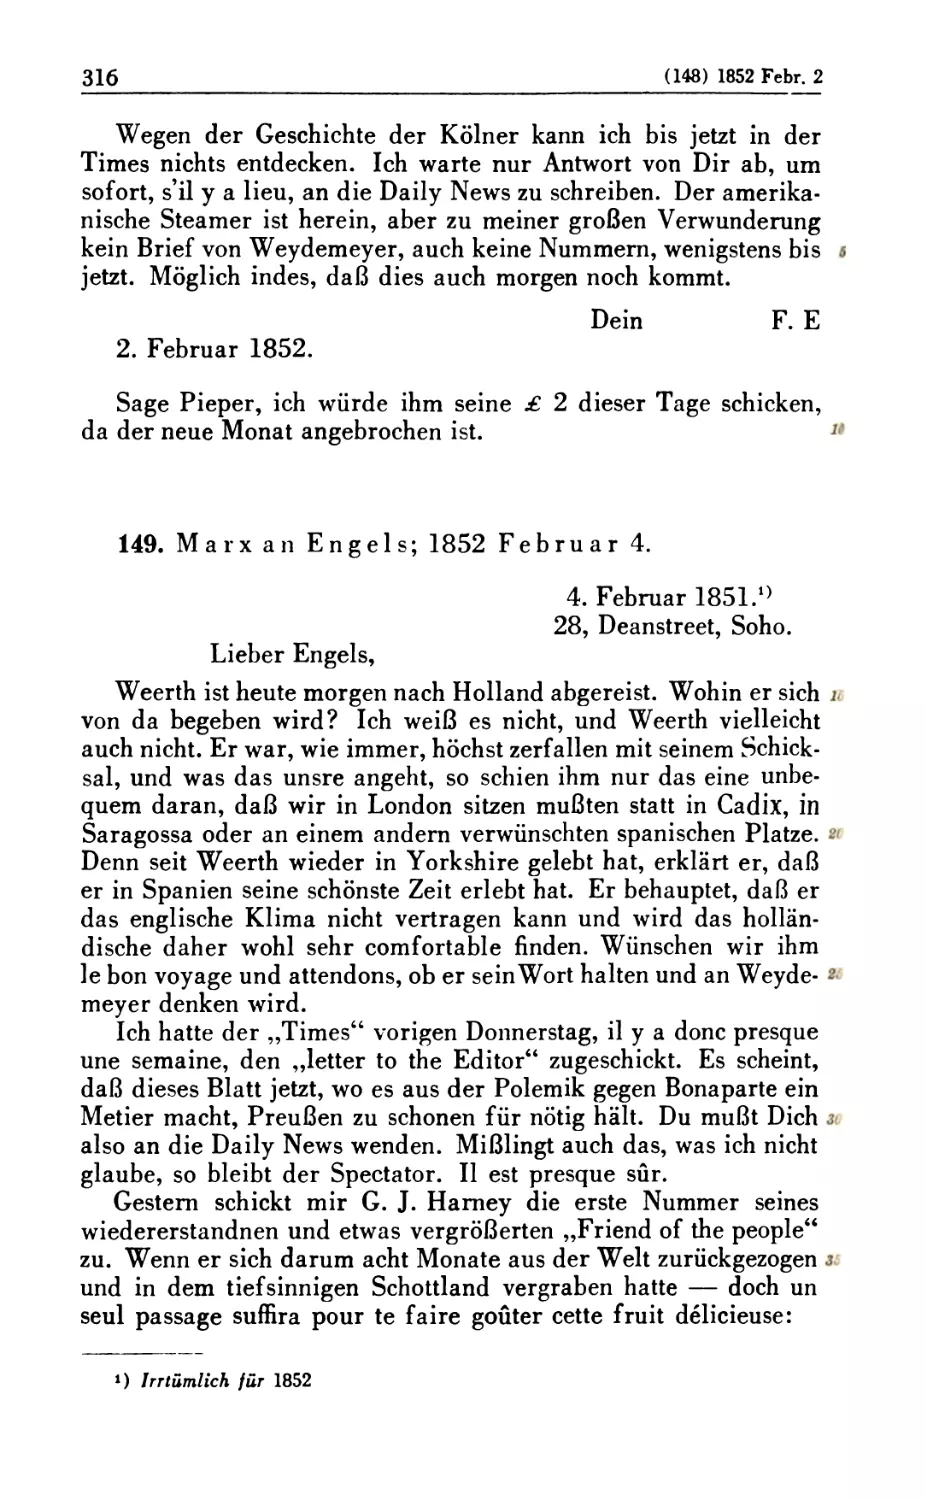 149. Marx an Engels; 1852 Februar 4